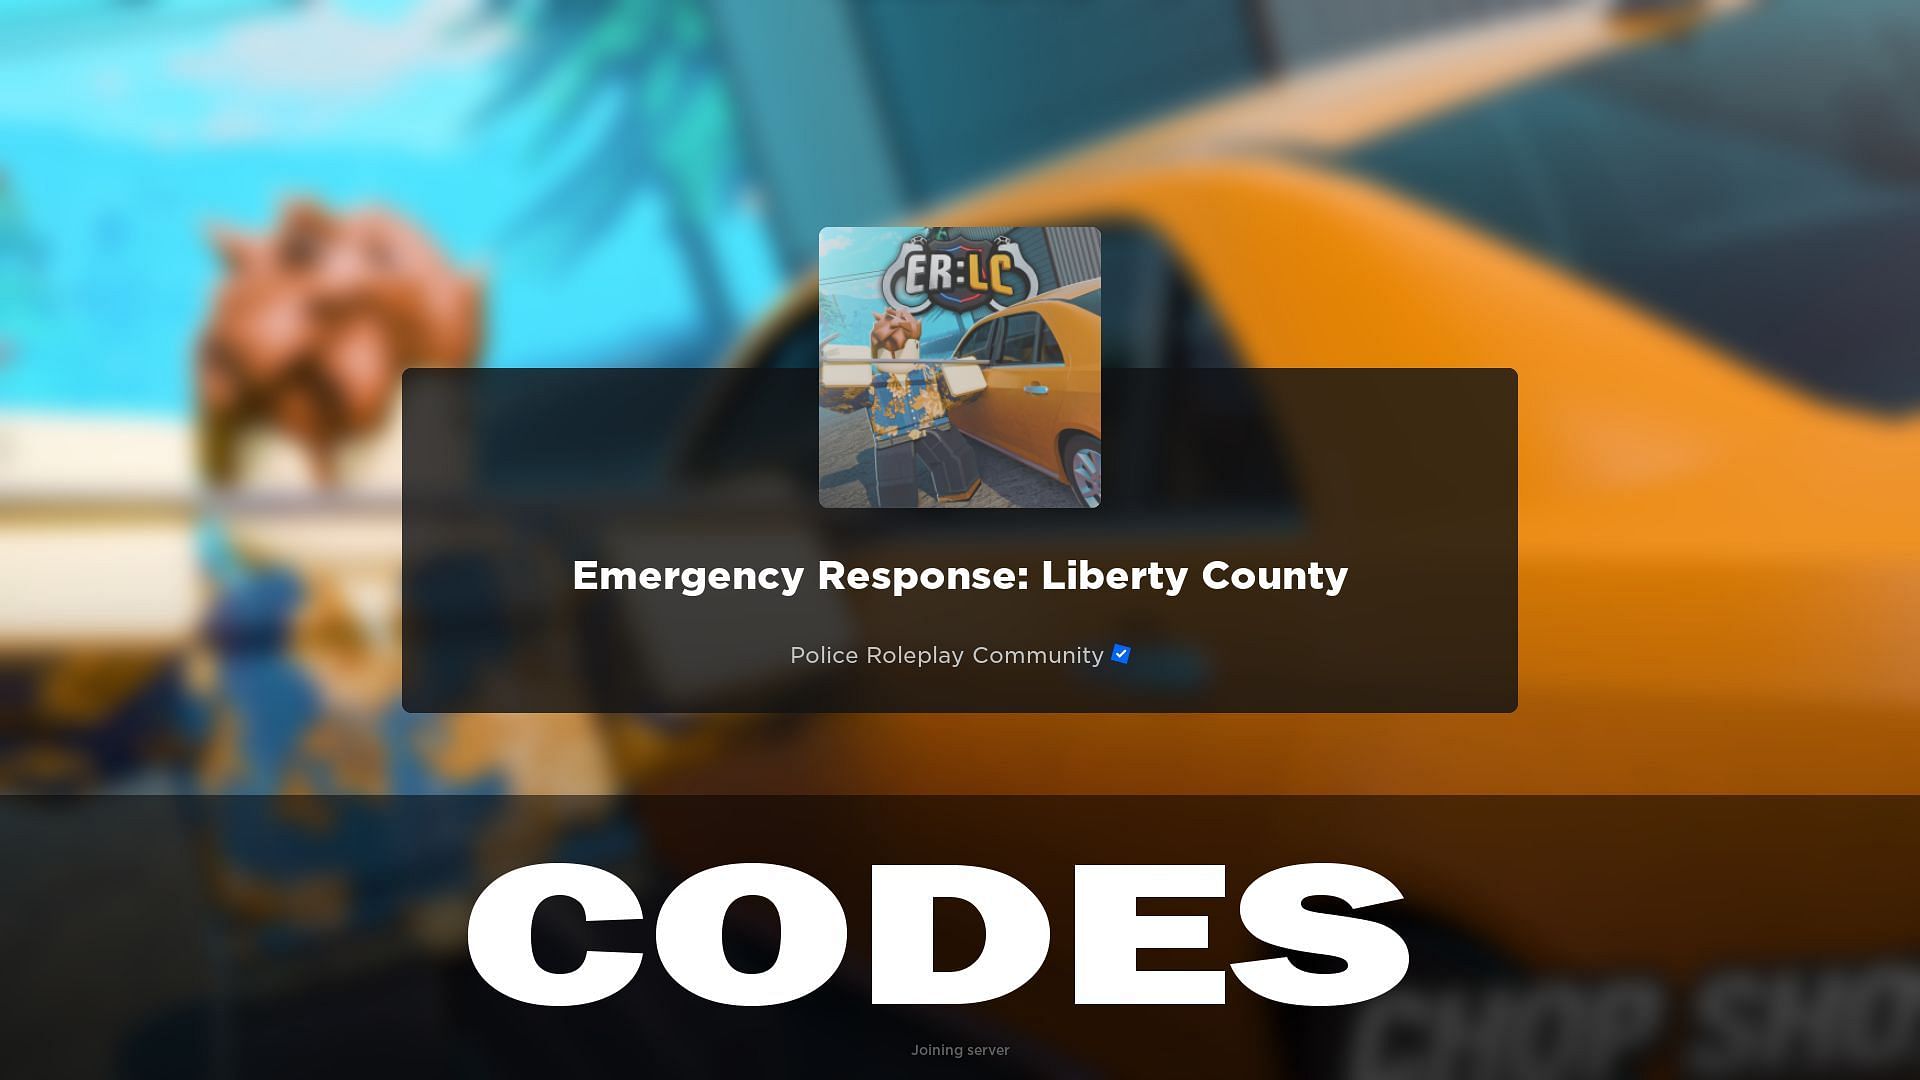 Emergency Response: Liberty County codes